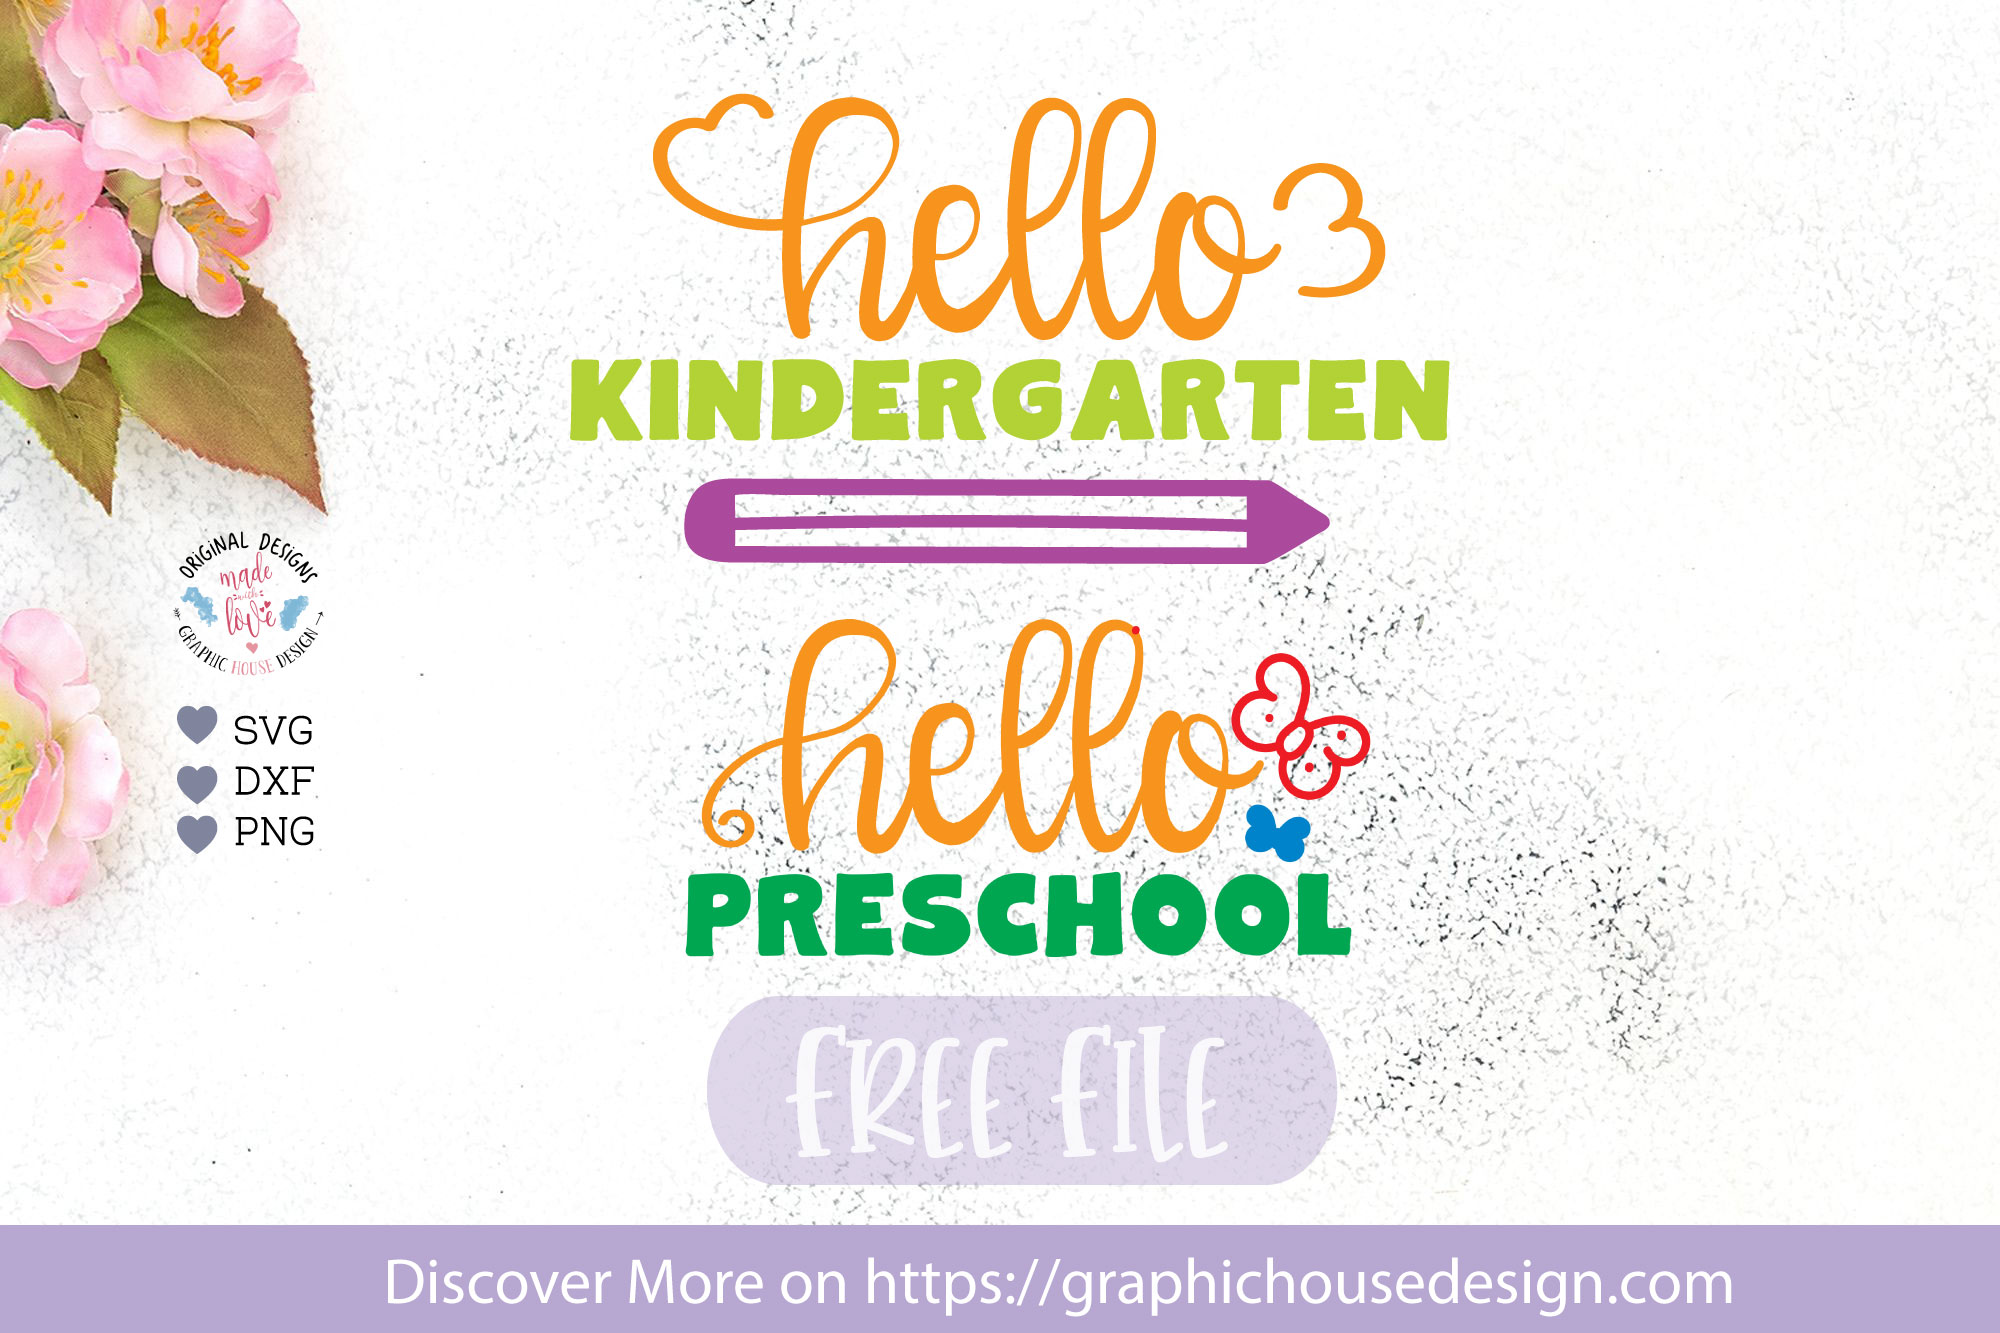 Free Cut File Hello Preschool + Hello Kindergarten